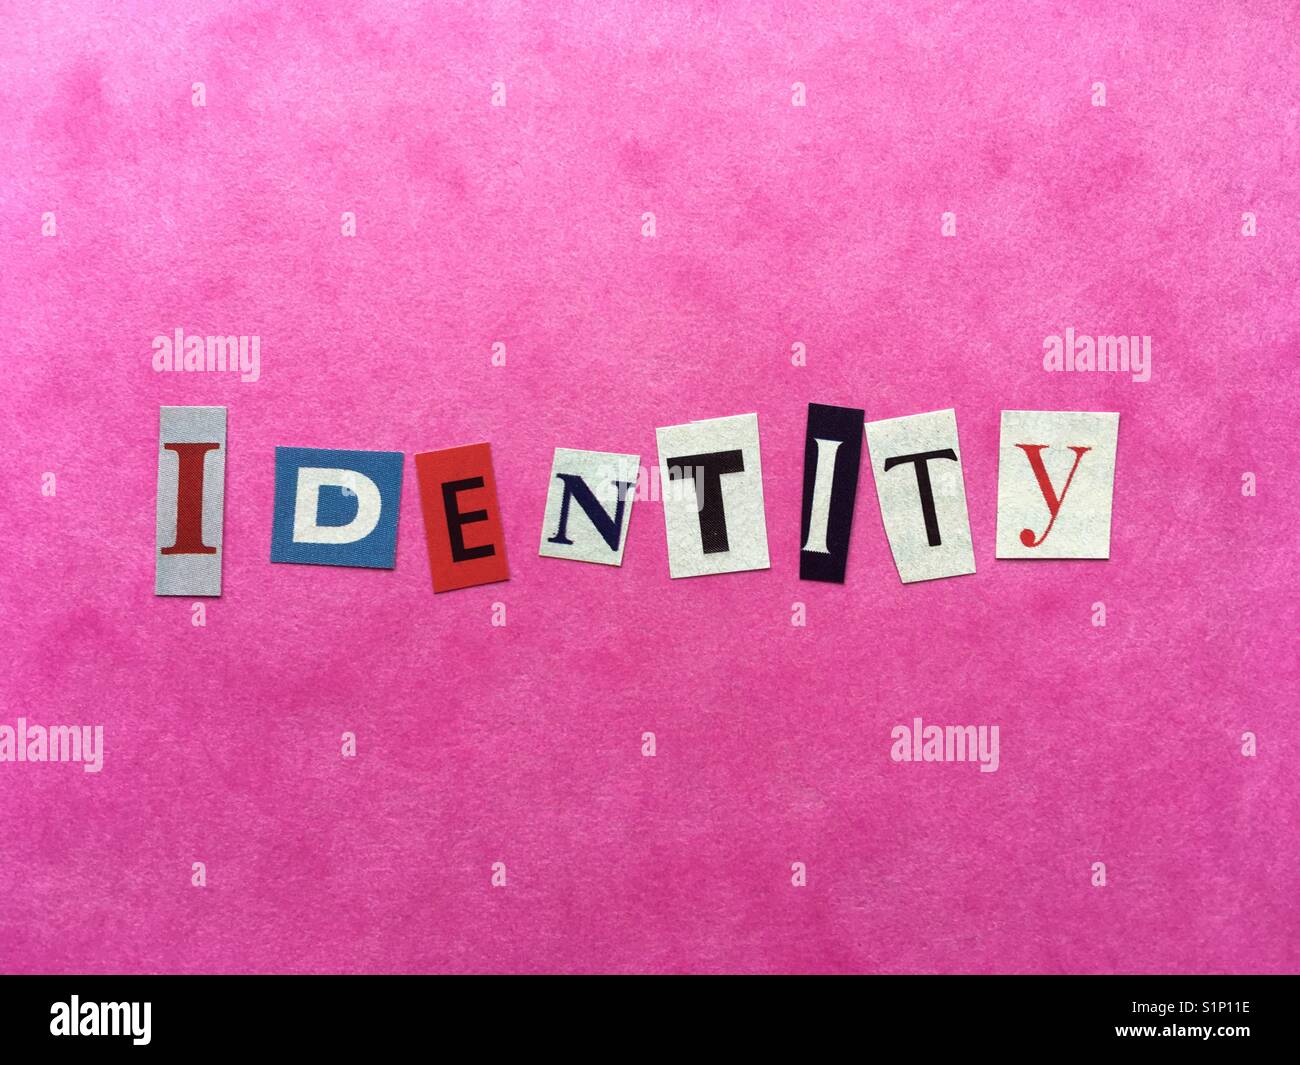 Identity Stock Photo